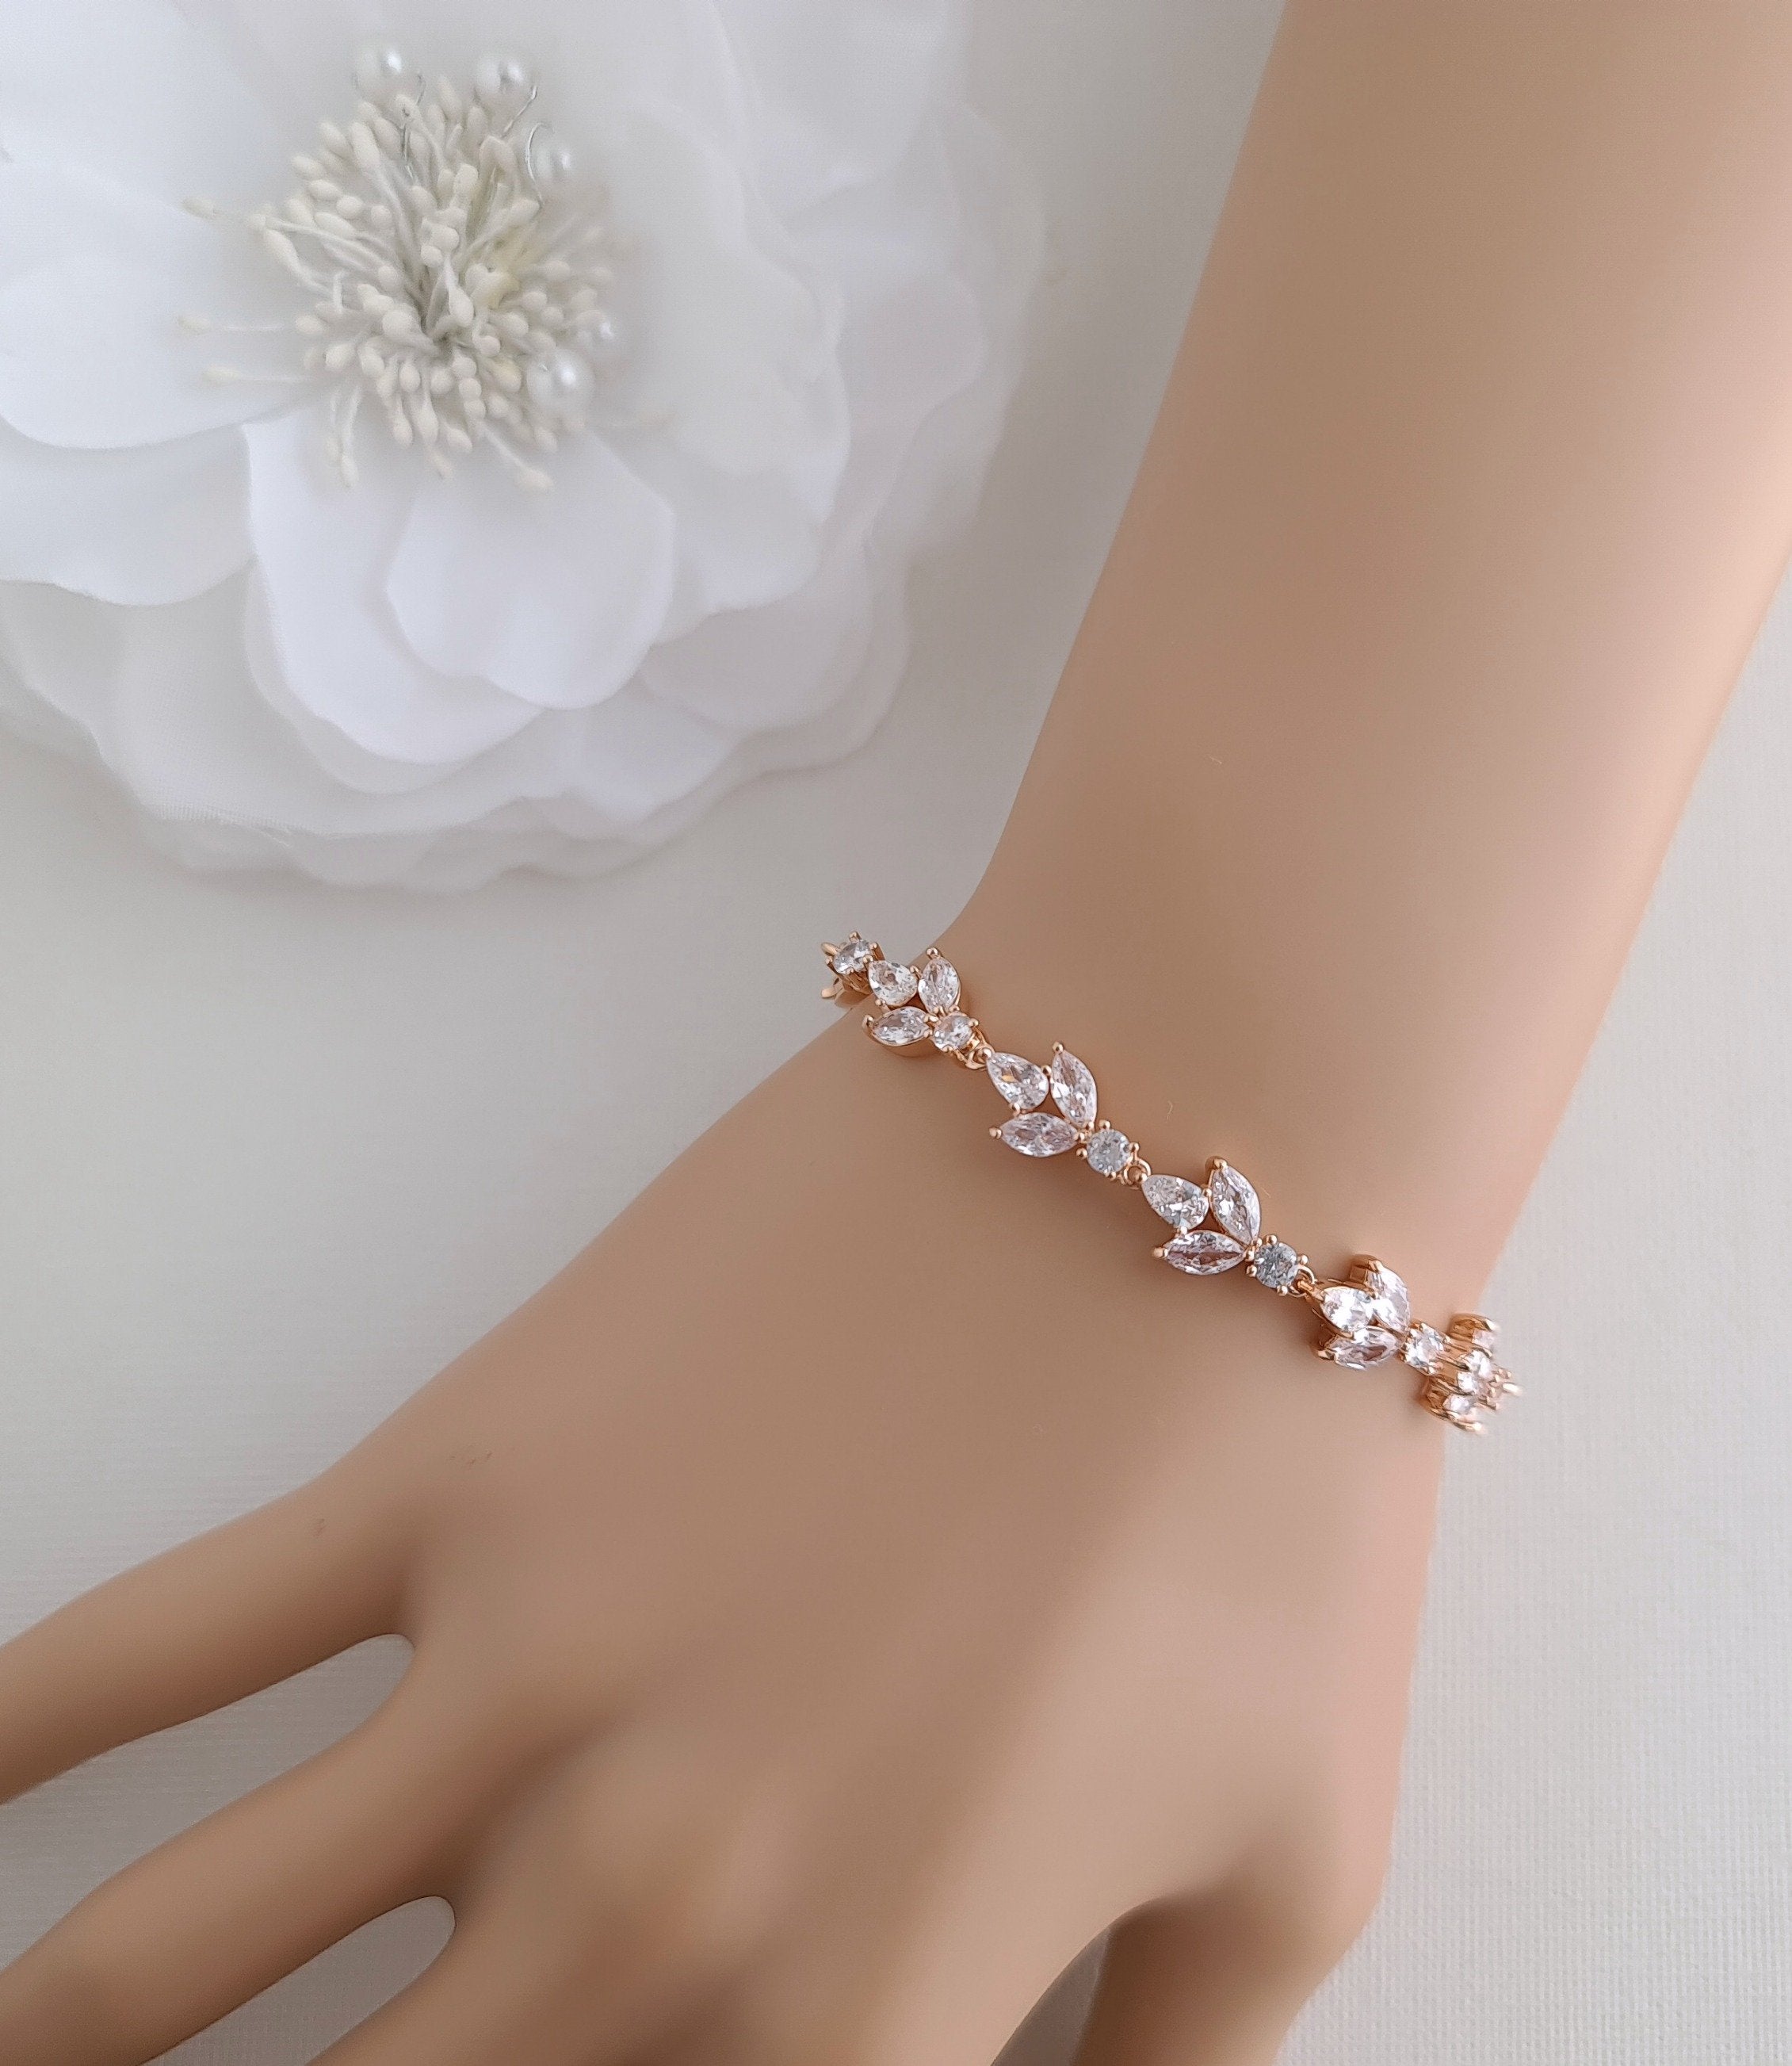 Sterling Silver Swarovski Crystal Bride/Wedding Finger Bracelet/Hand Chain  | eBay